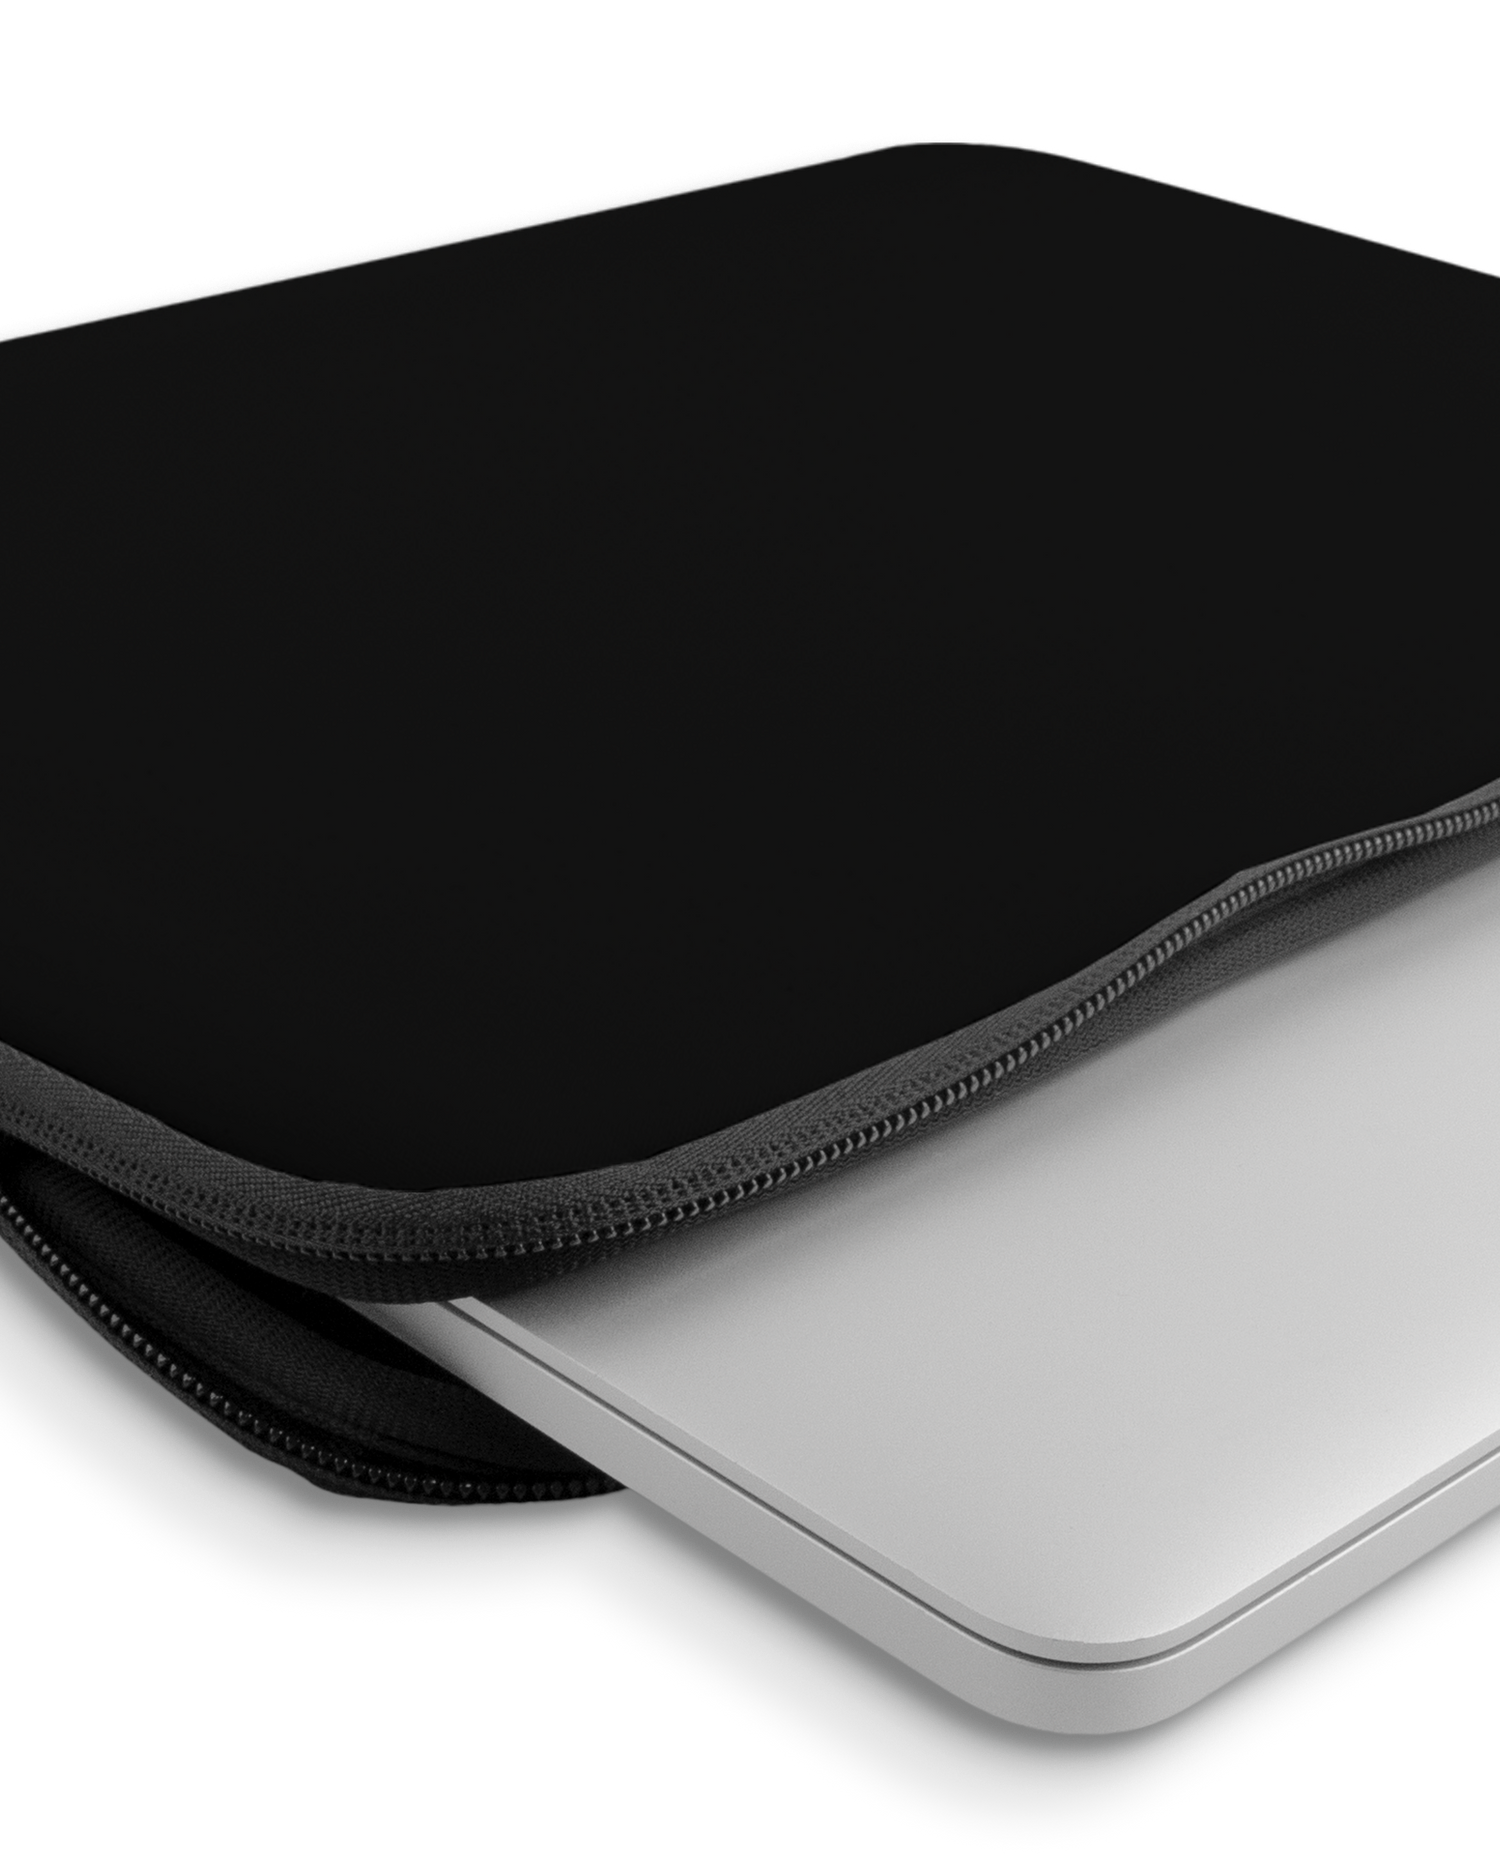 BLACK Laptophülle 14-15 Zoll mit Gerät im Inneren